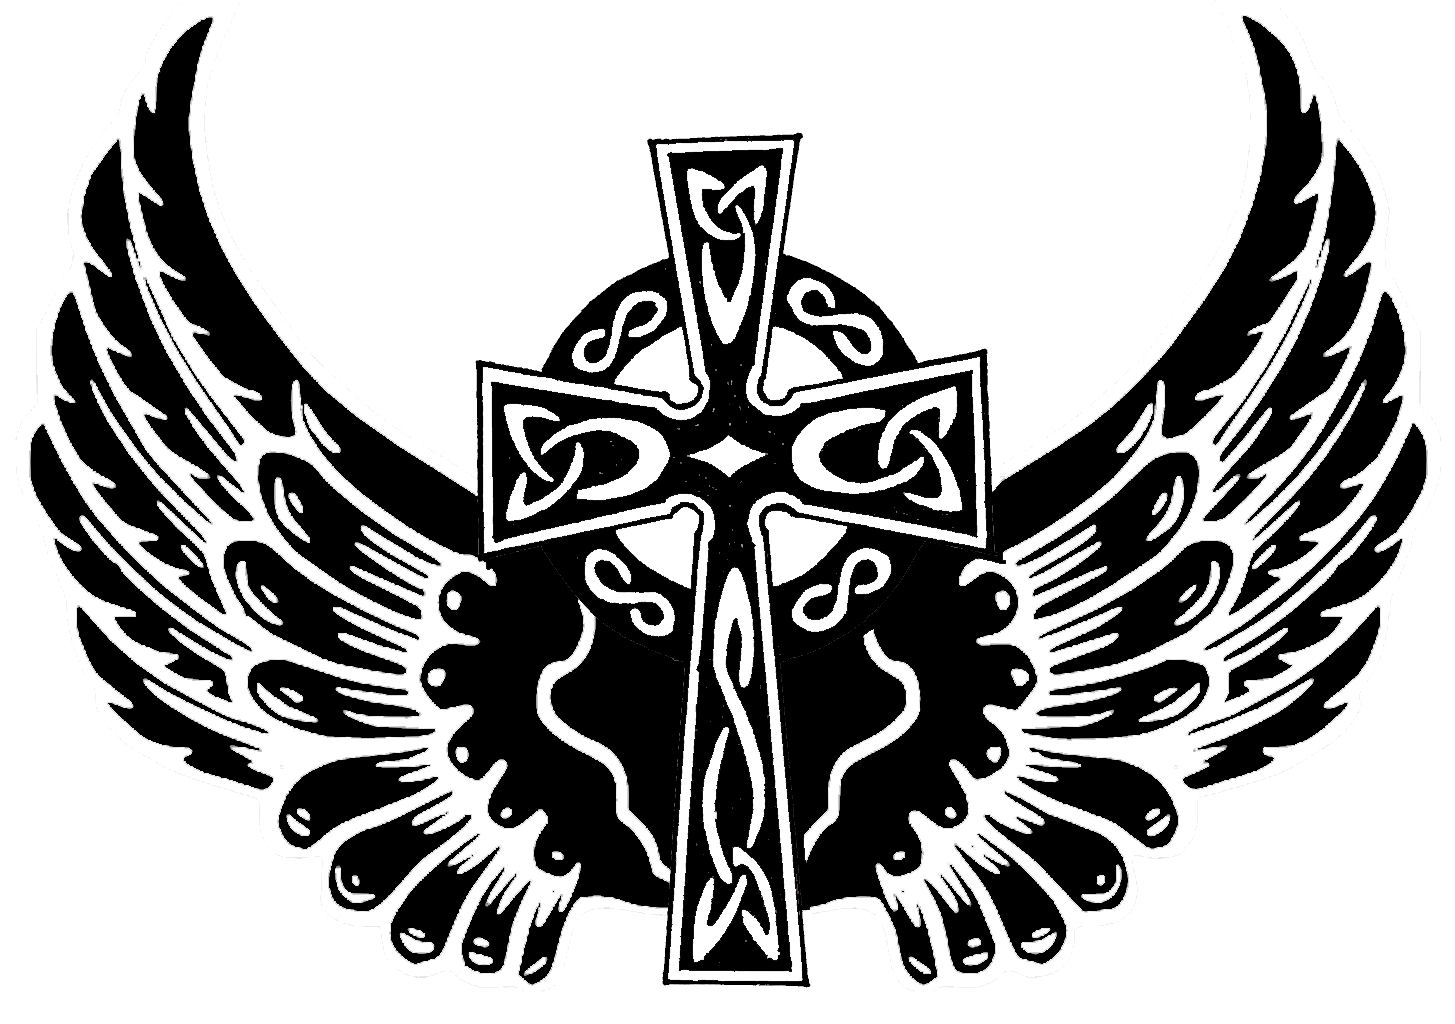 http://3.bp.blogspot.com/-nt6qC7JZuj8/T-ZzrgfT8AI/AAAAAAAAA0Q/c2D7i8xBWoo/s1600/eagles+with+celtic+cross+ready+for+etching.jpg